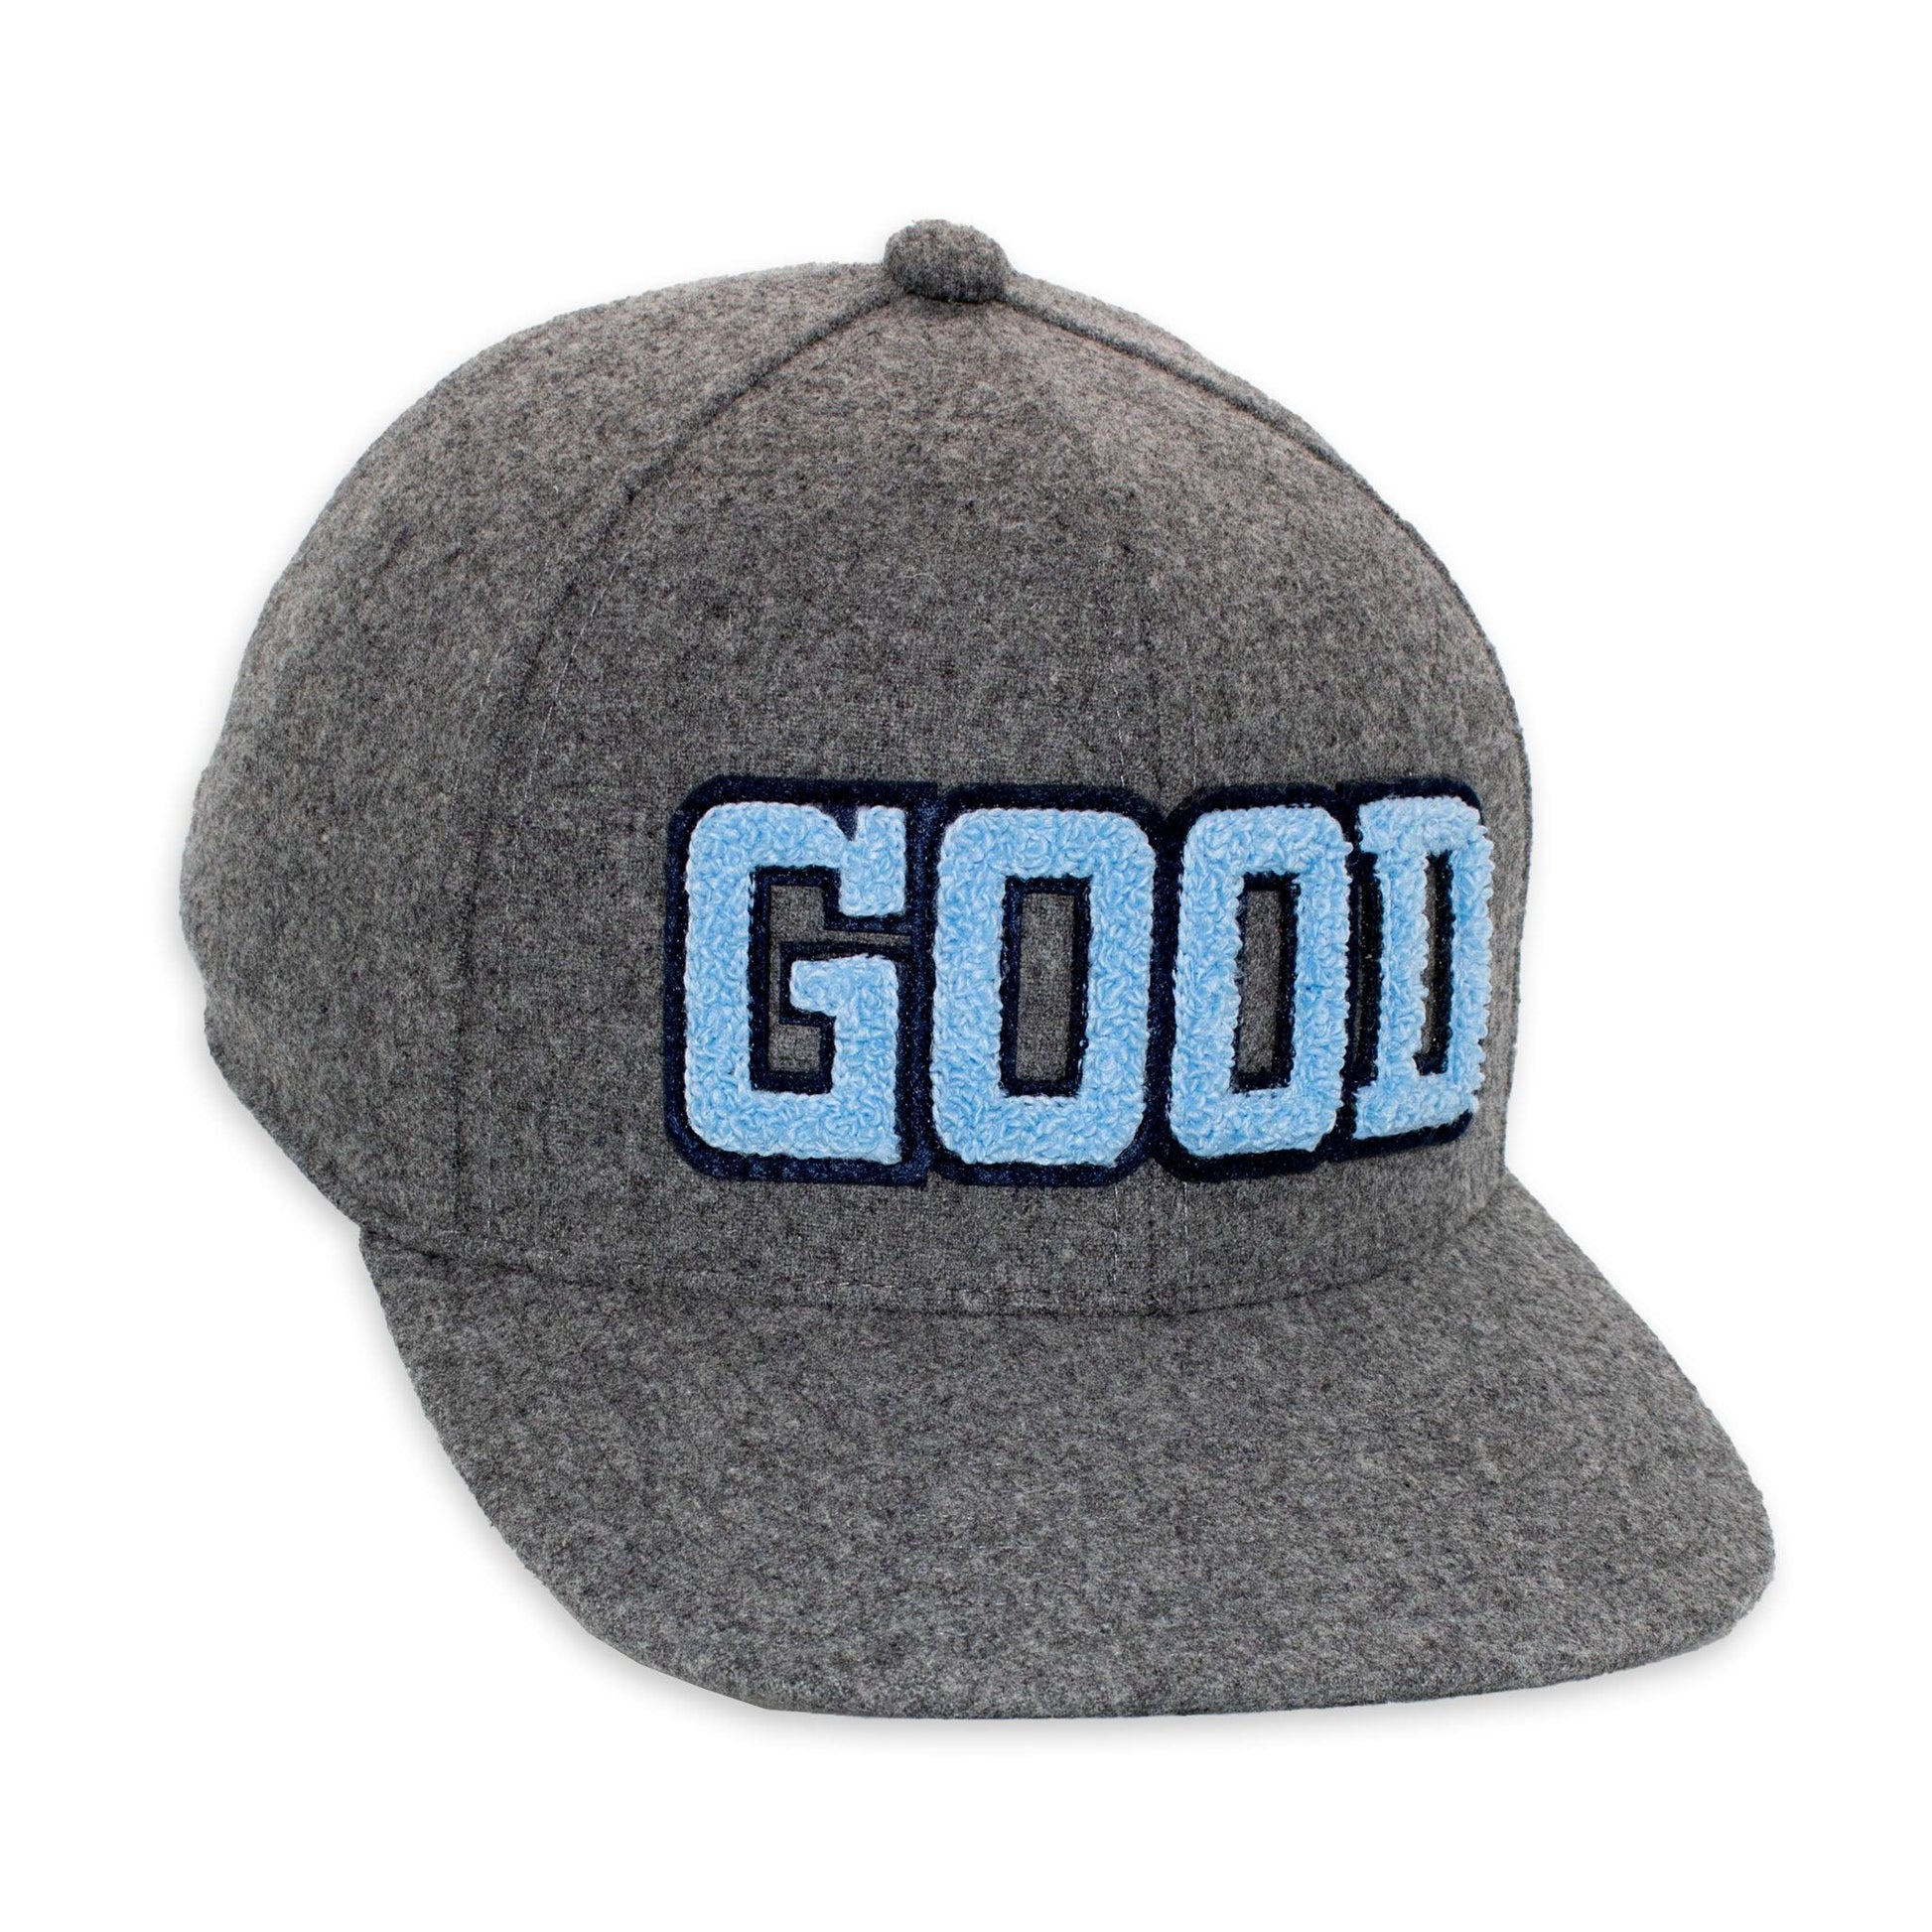 Mulligan Flannel Hat from Good Good Golf